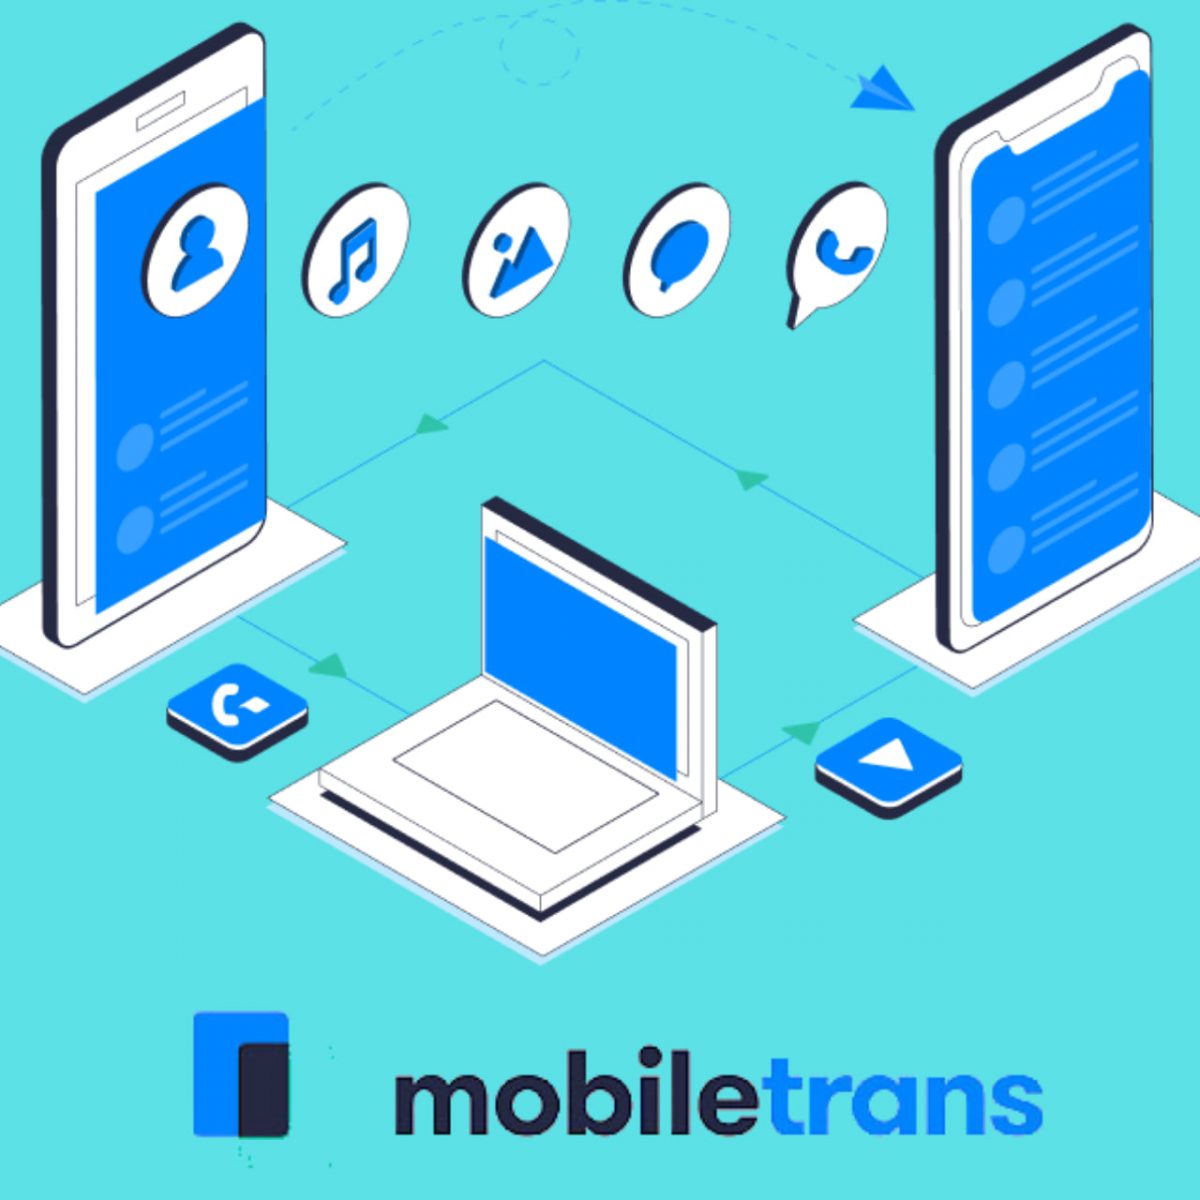 wondershare mobiletrans free